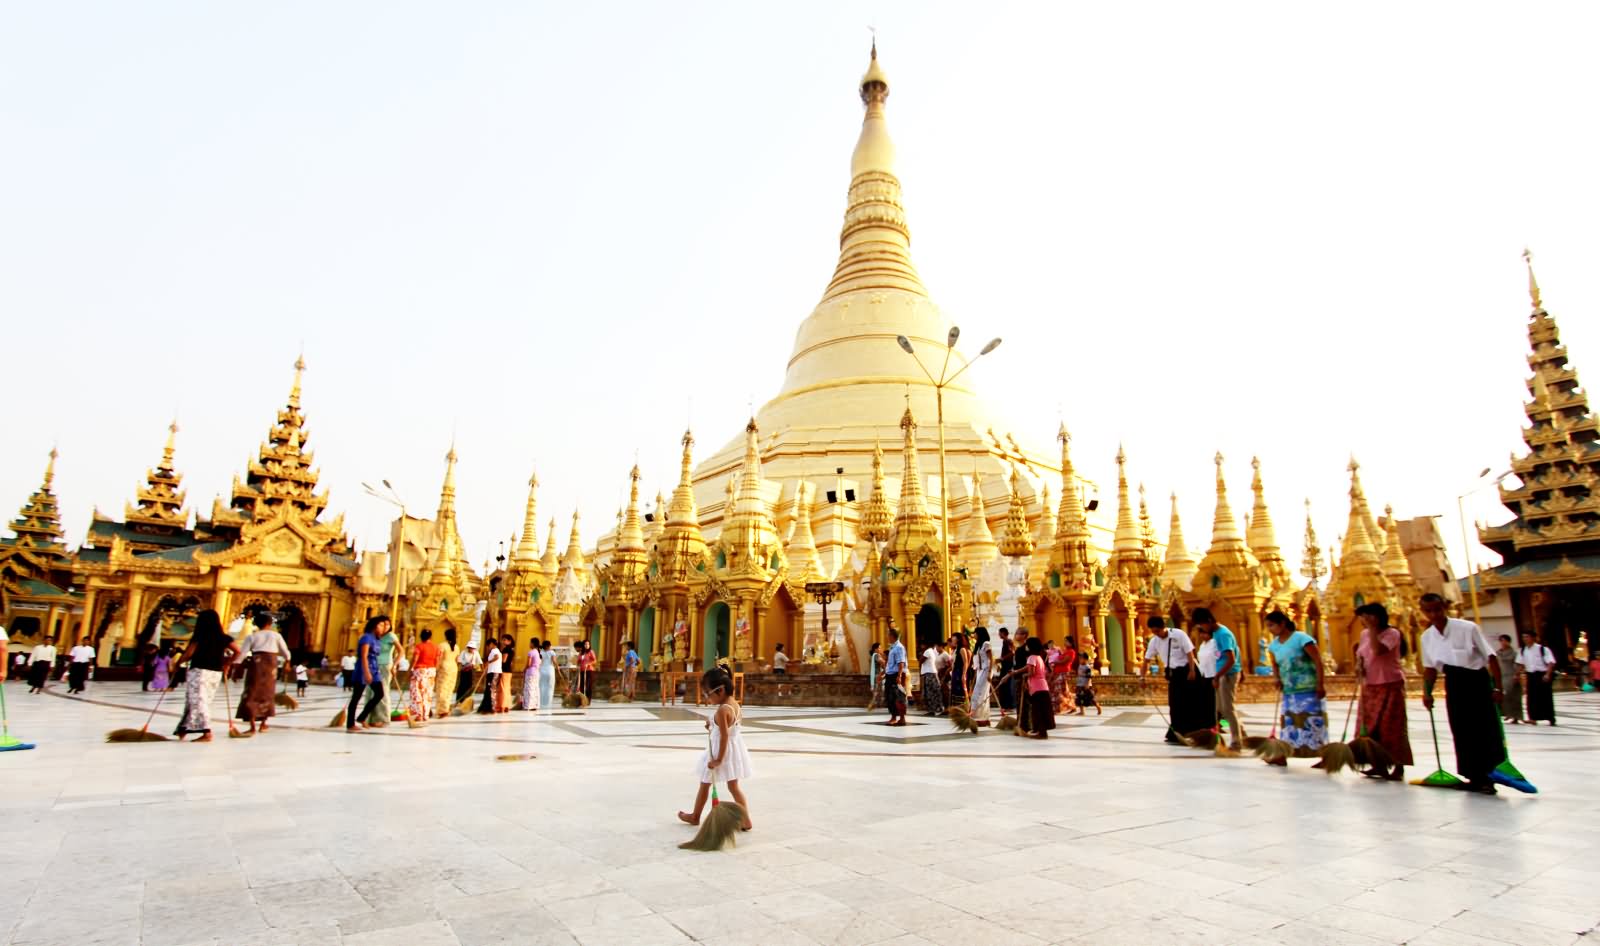 Cleaning Time At The Shwedagon Pagoda, Yangon